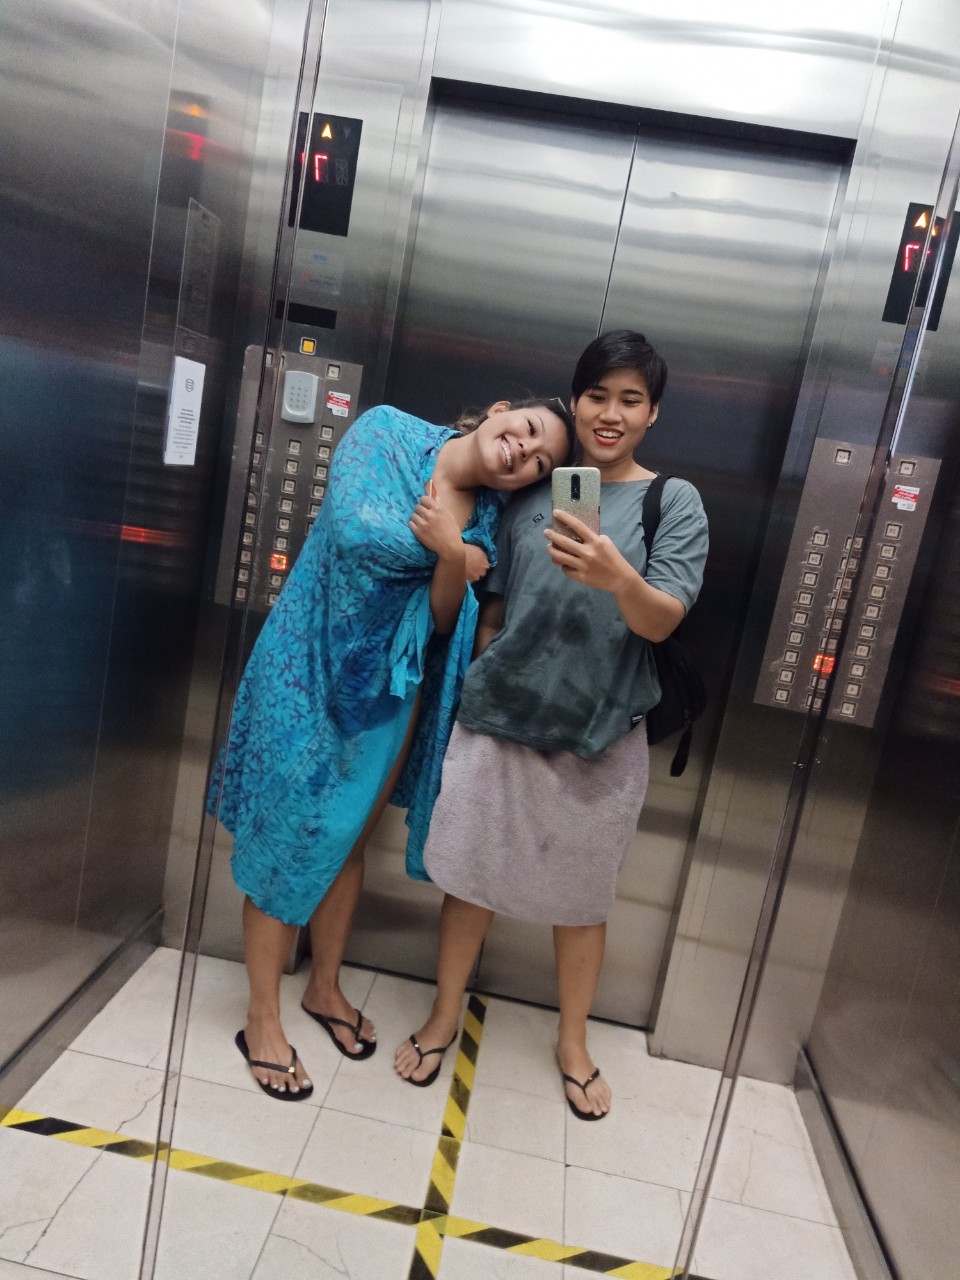 Two friends in an elevator